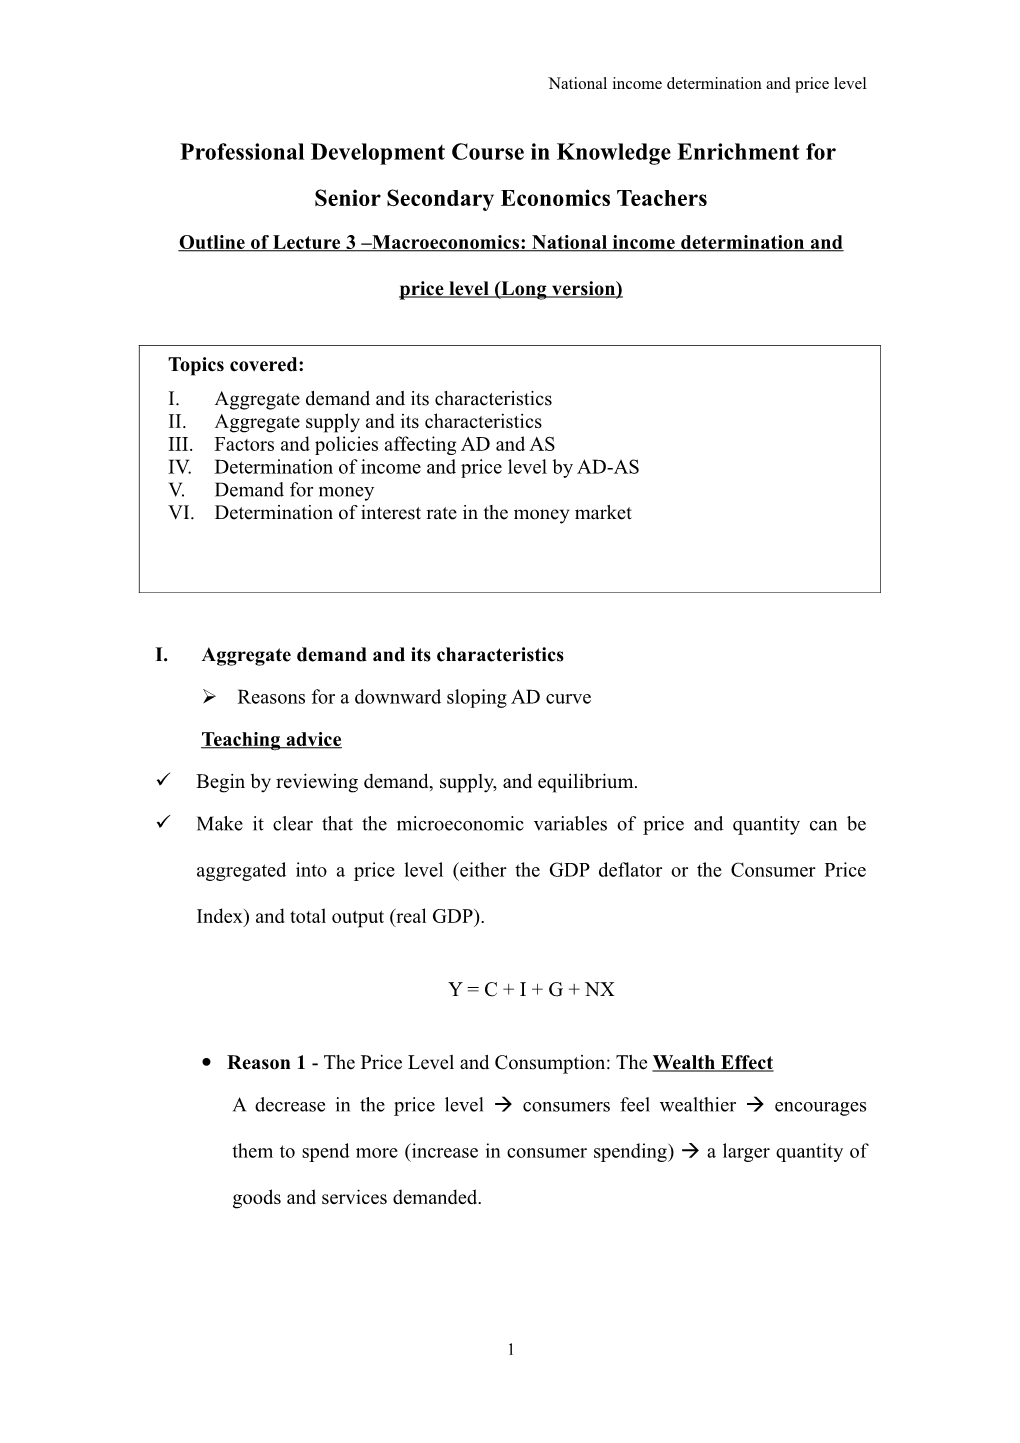 Outline of Lecture 1 Basic Economics Concepts